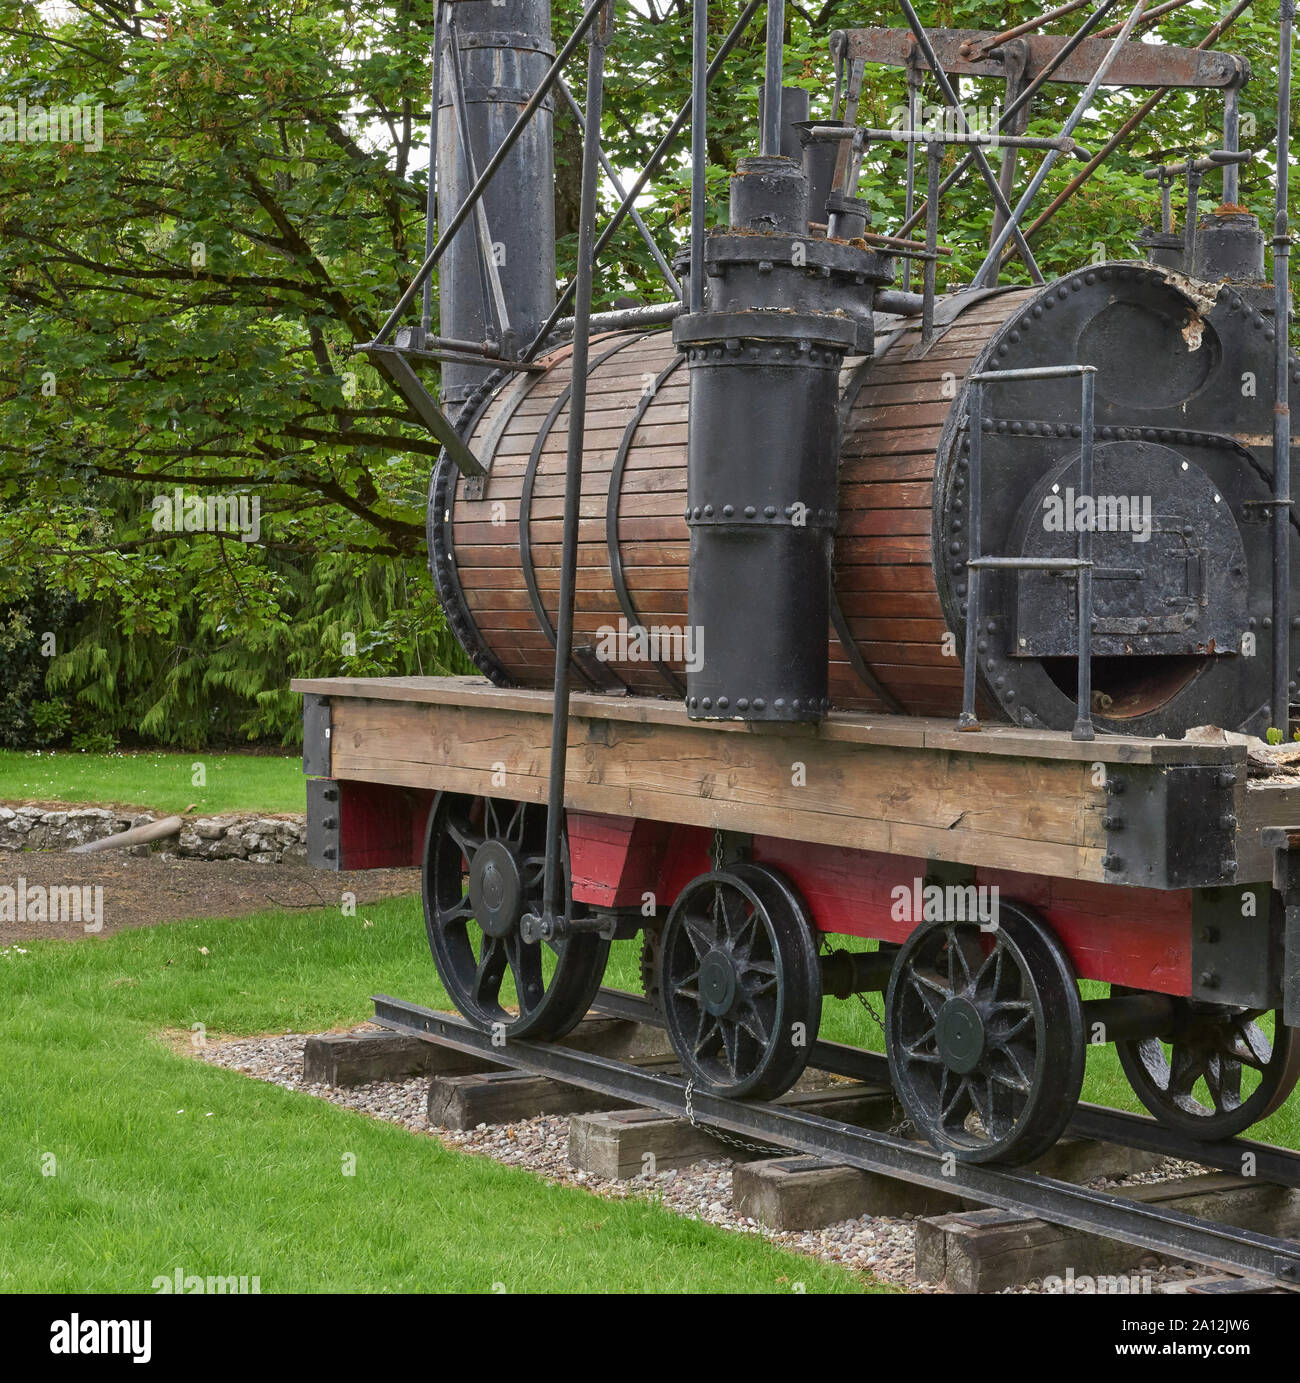 Ireland Trip (May 19-29, 2019) Jameson Distillery. Midleton, County cork, Ireland. Locomotive that transported whiskey barrels from distillery Stock Photo